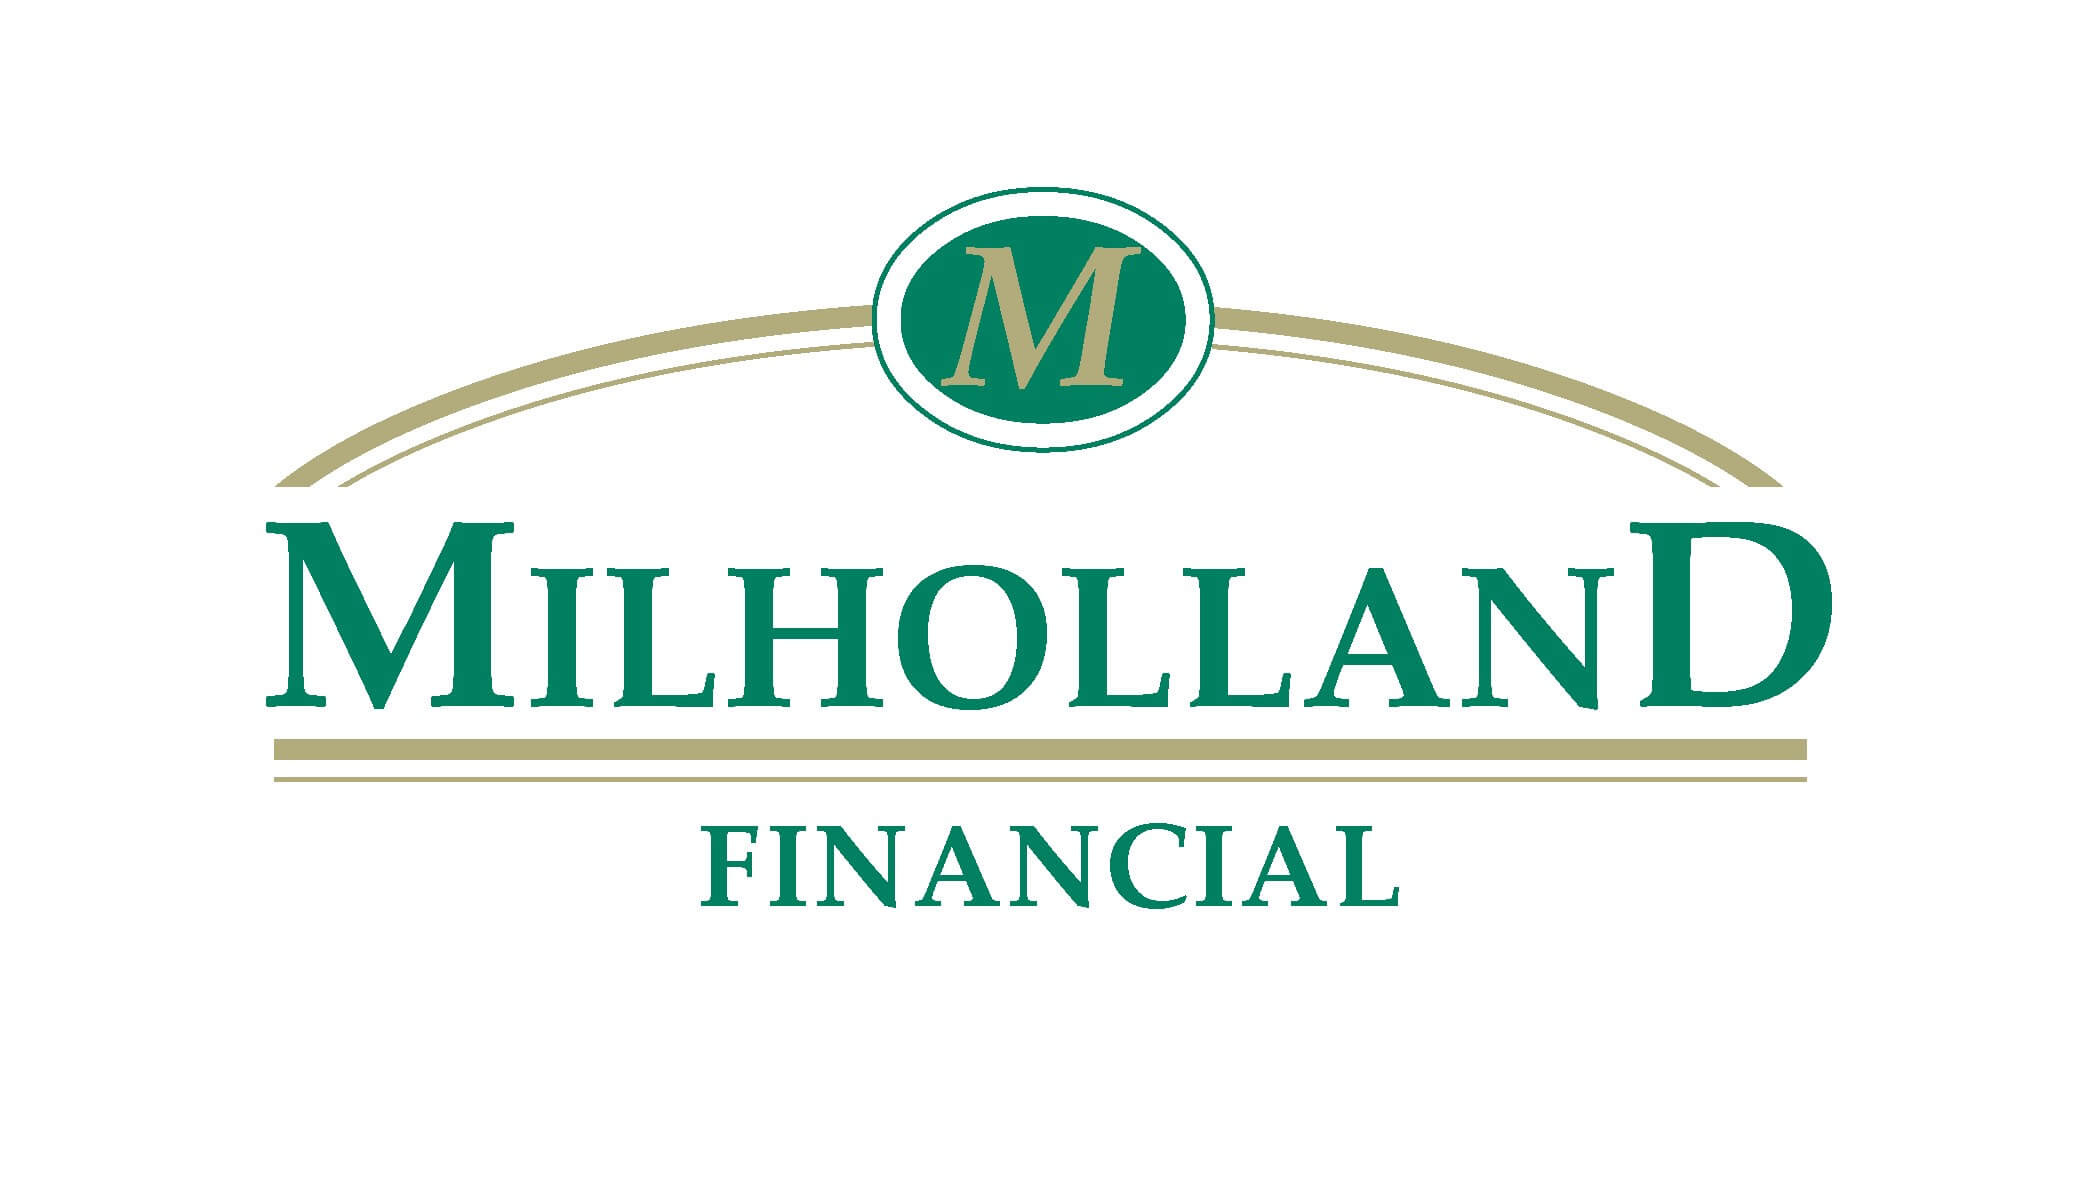 Milholland financial logo